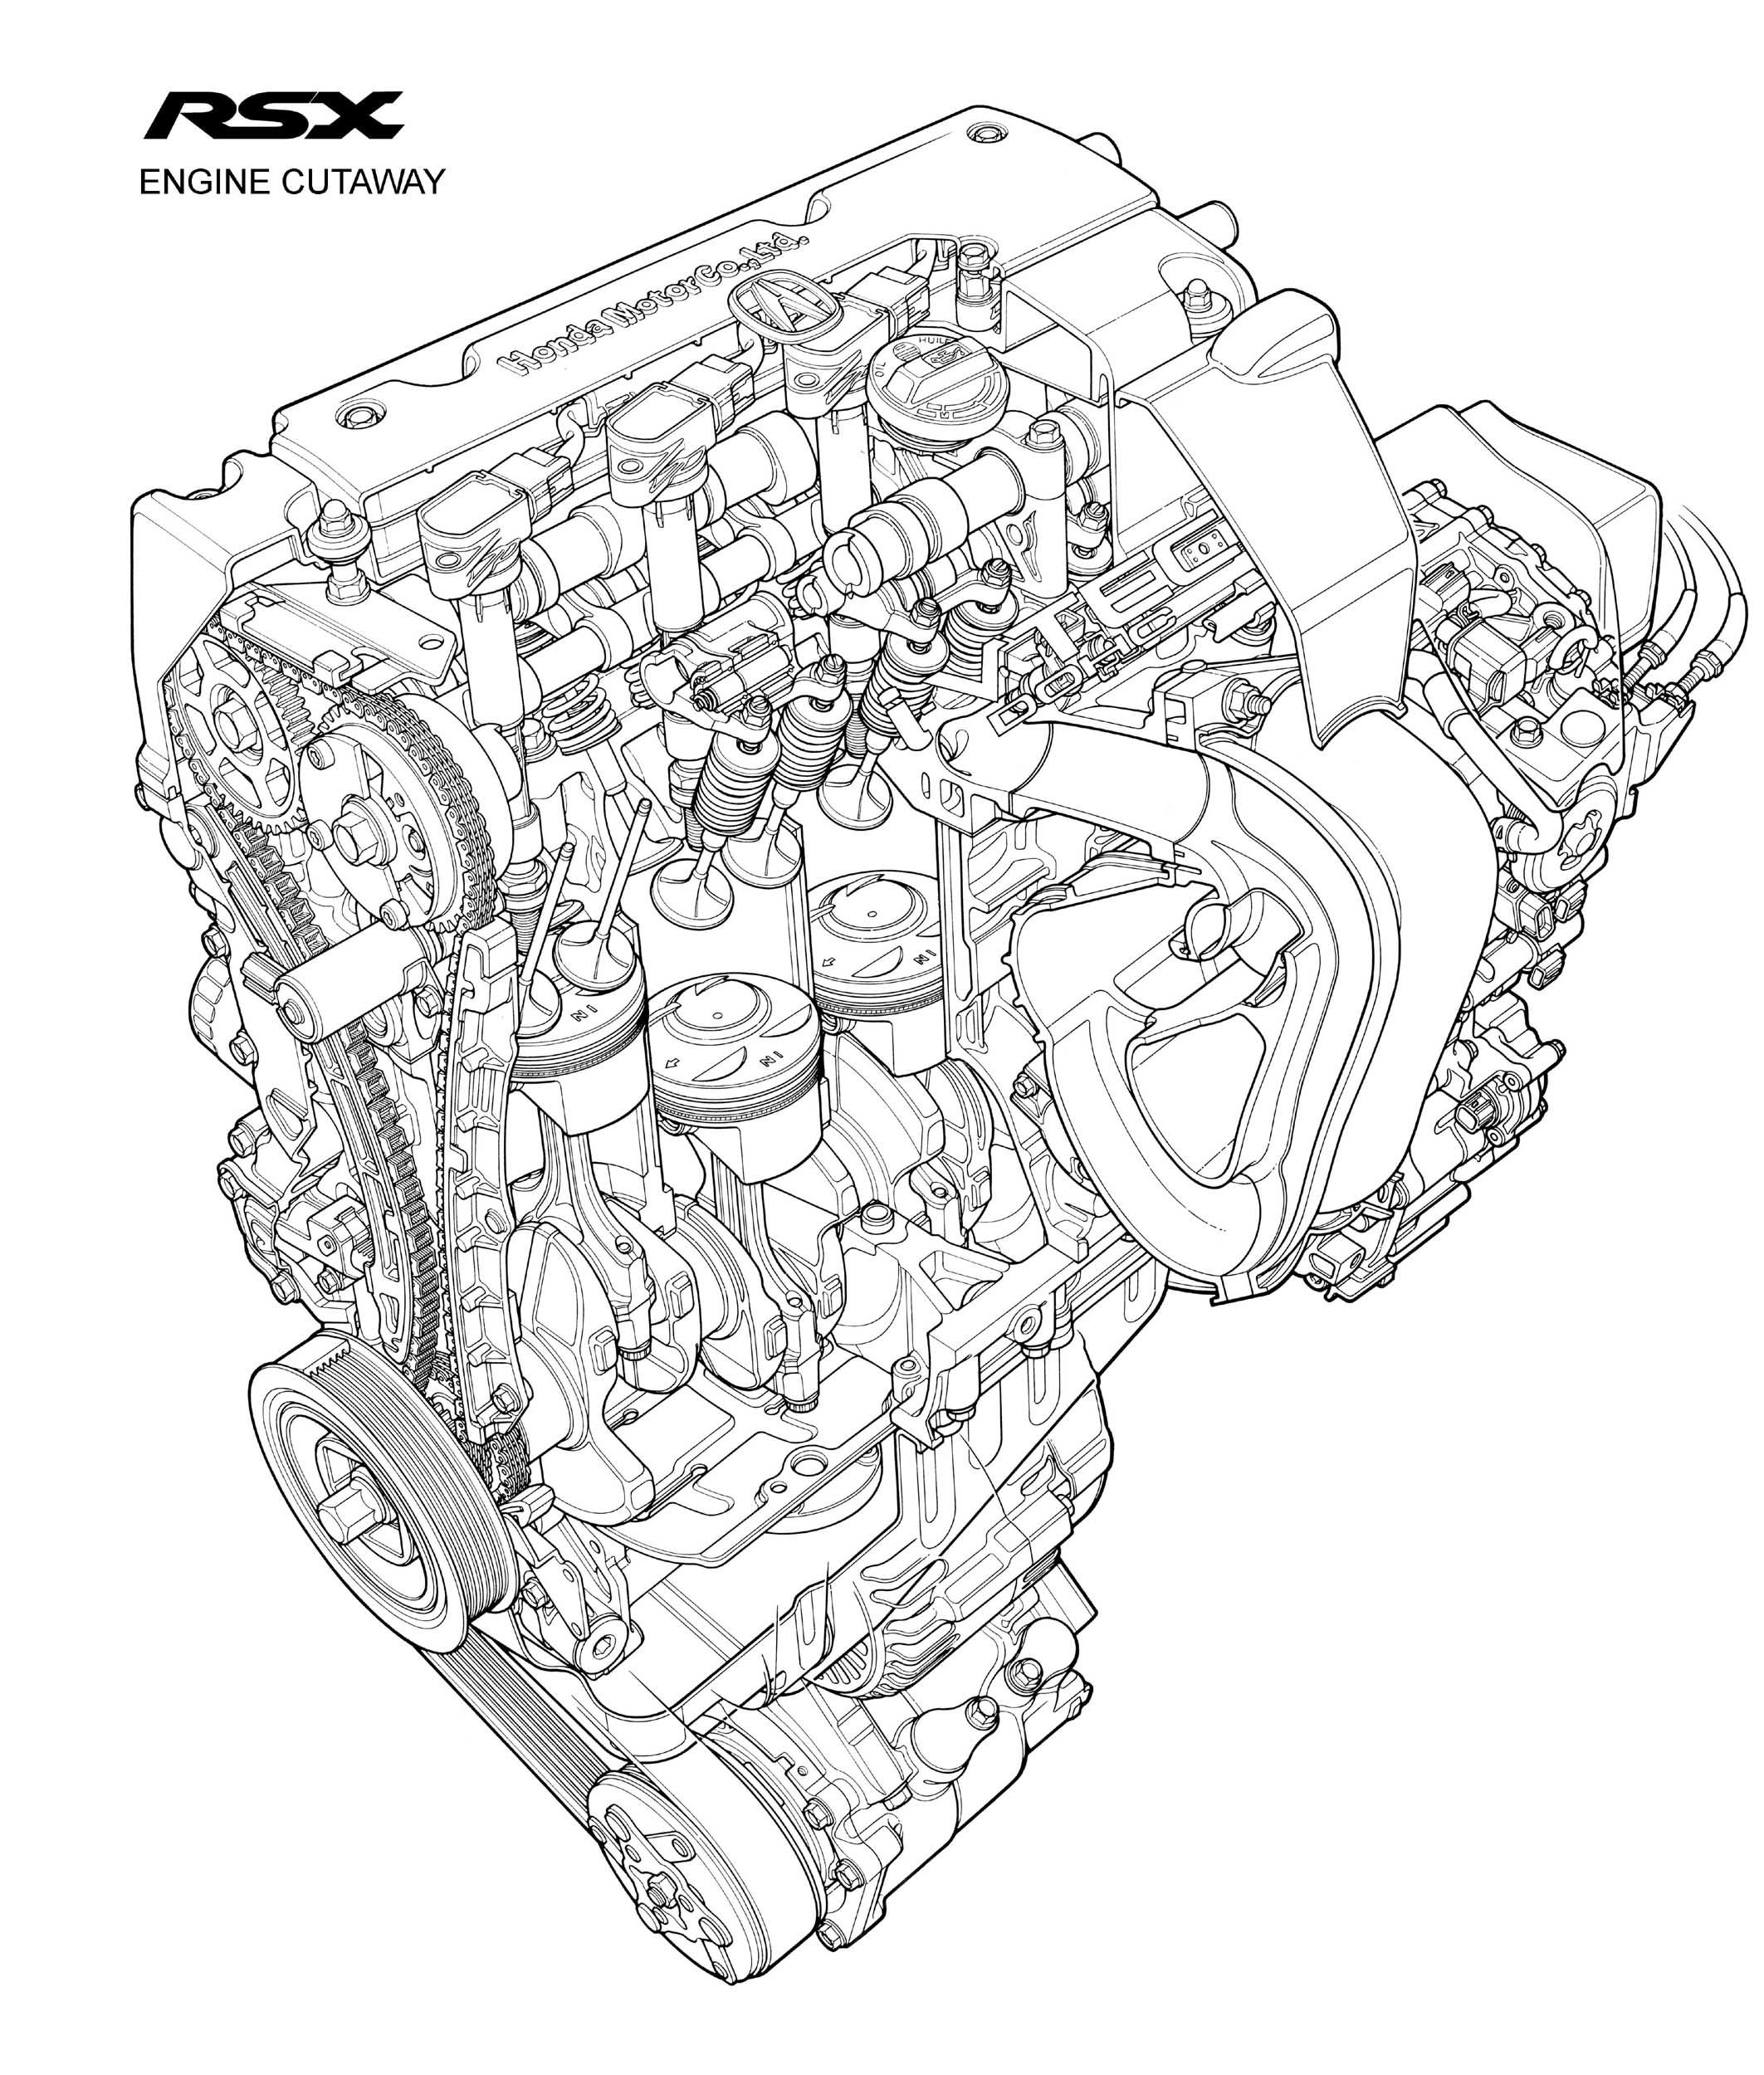 Acura Rsx Engine Cutaway Type S Honda